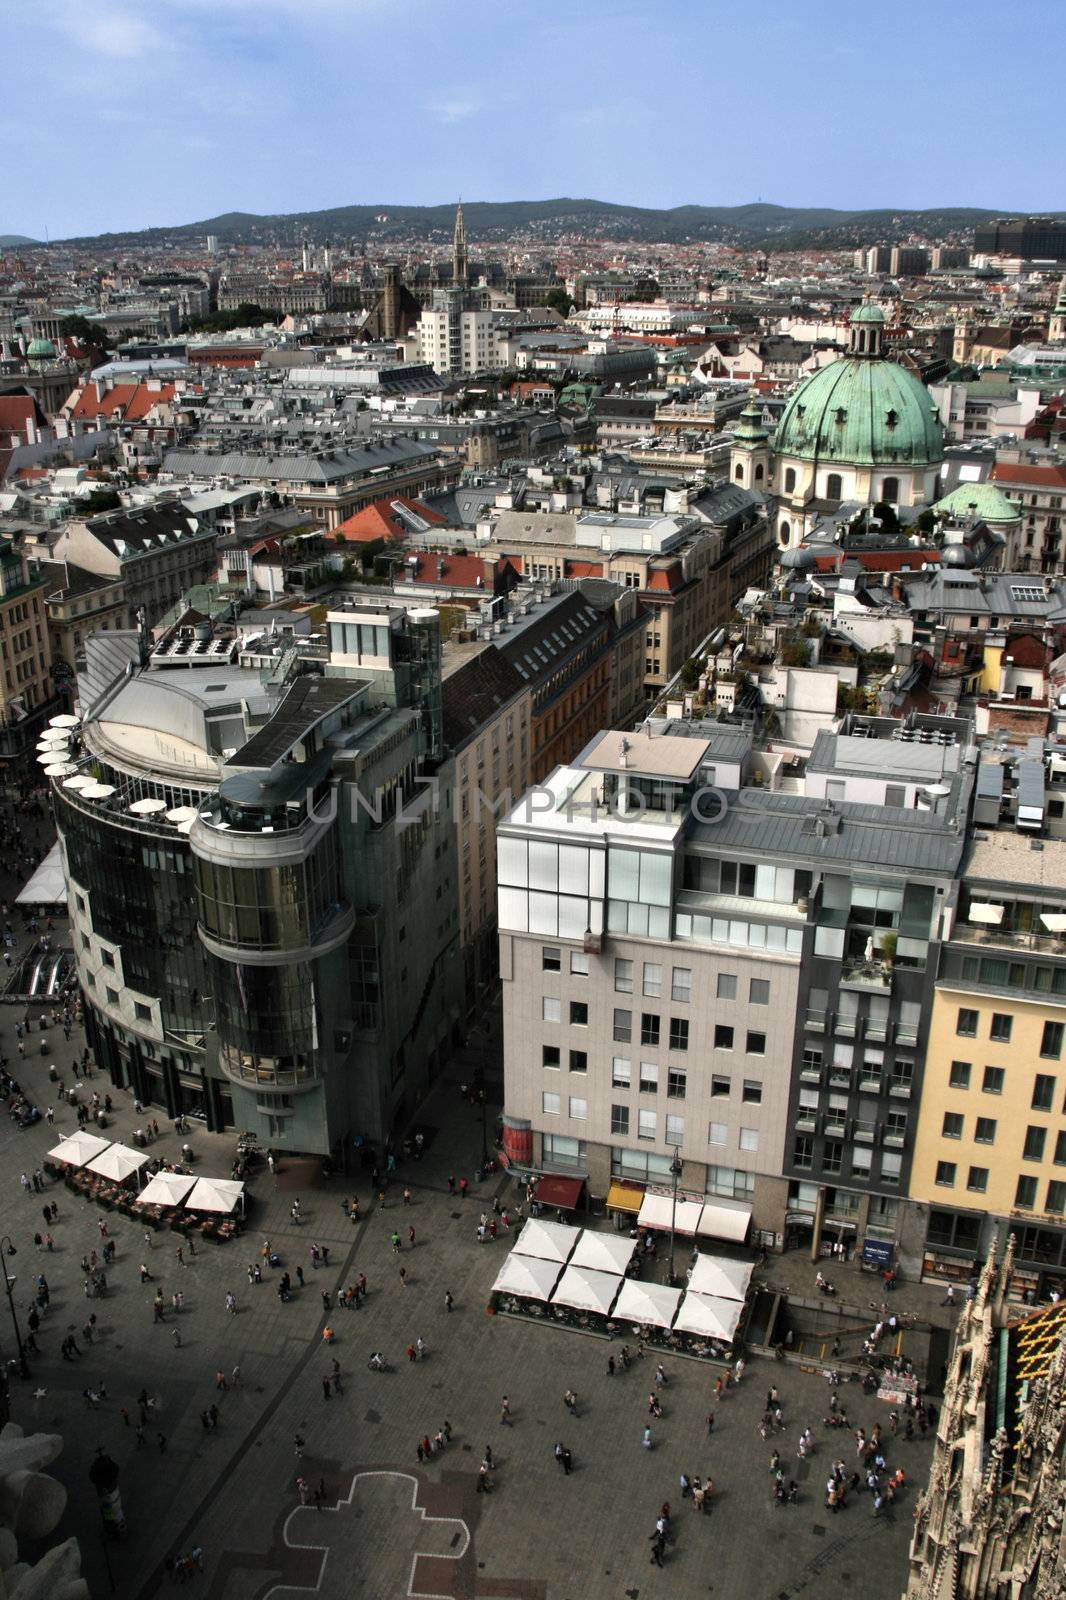 Vienna aerial view by tupungato